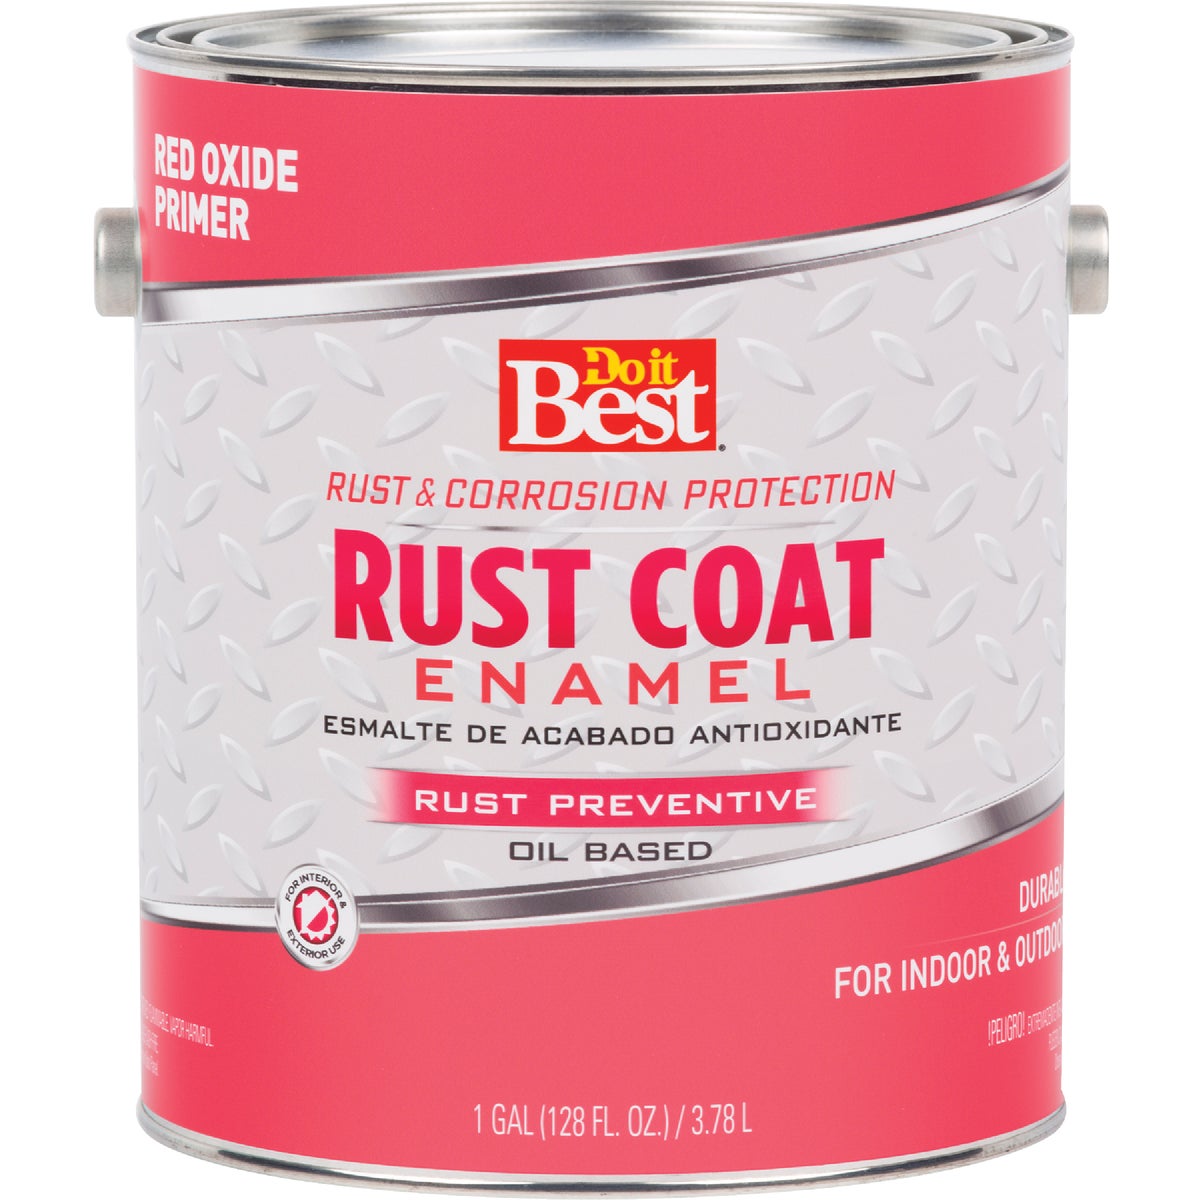 Do it Best Rust Coat Enamel Primer, Red Oxide, 1 Gal.